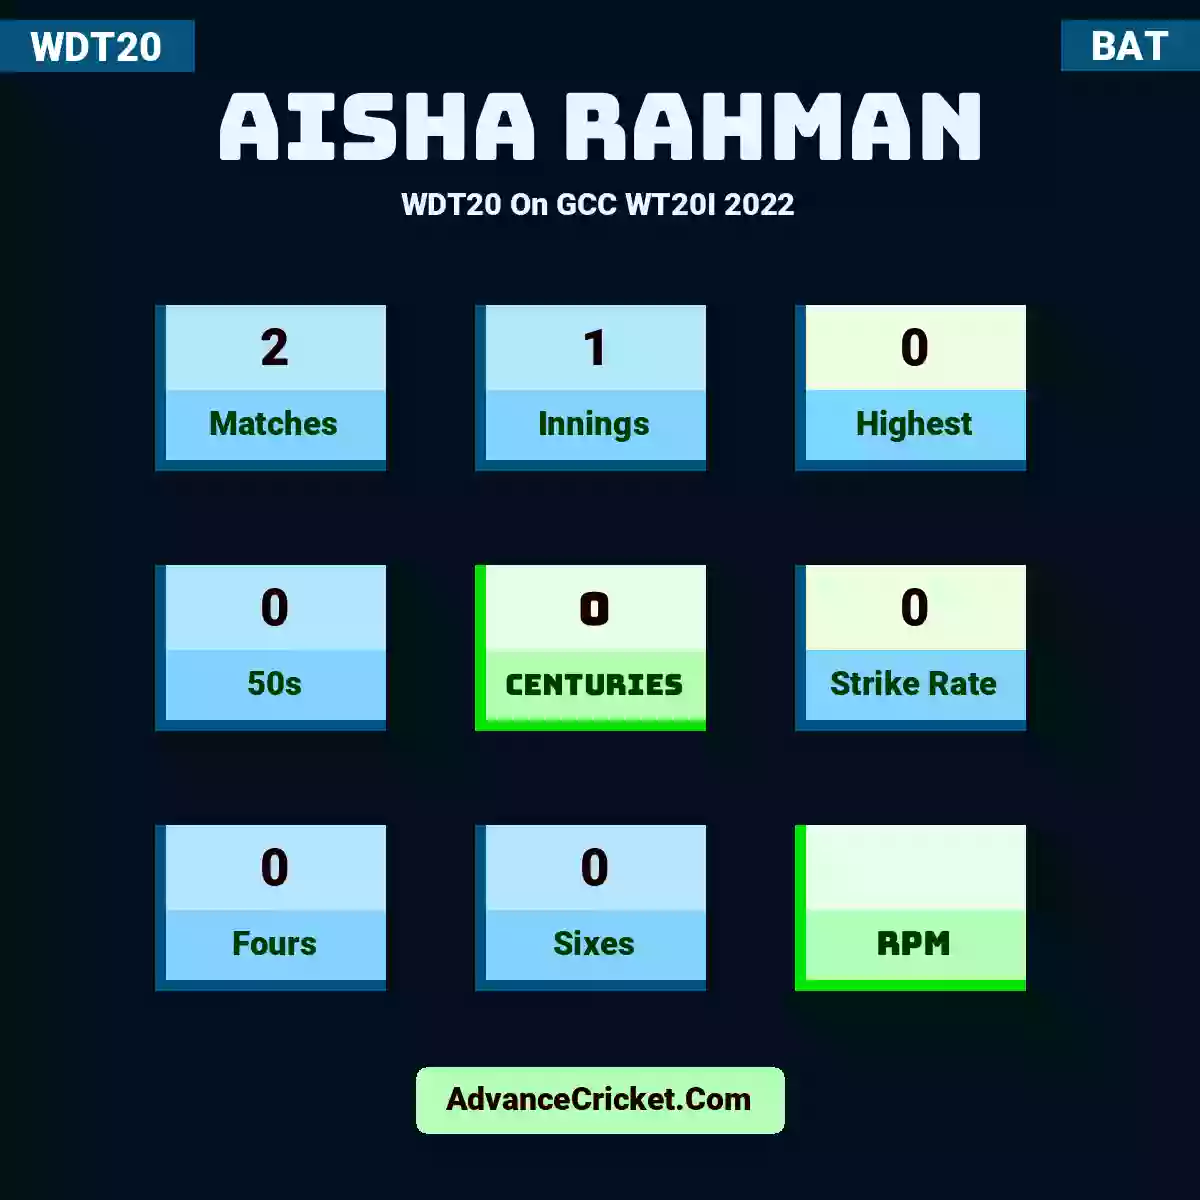 Aisha Rahman WDT20  On GCC WT20I 2022, Aisha Rahman played 2 matches, scored 0 runs as highest, 0 half-centuries, and 0 centuries, with a strike rate of 0. A.Rahman hit 0 fours and 0 sixes.